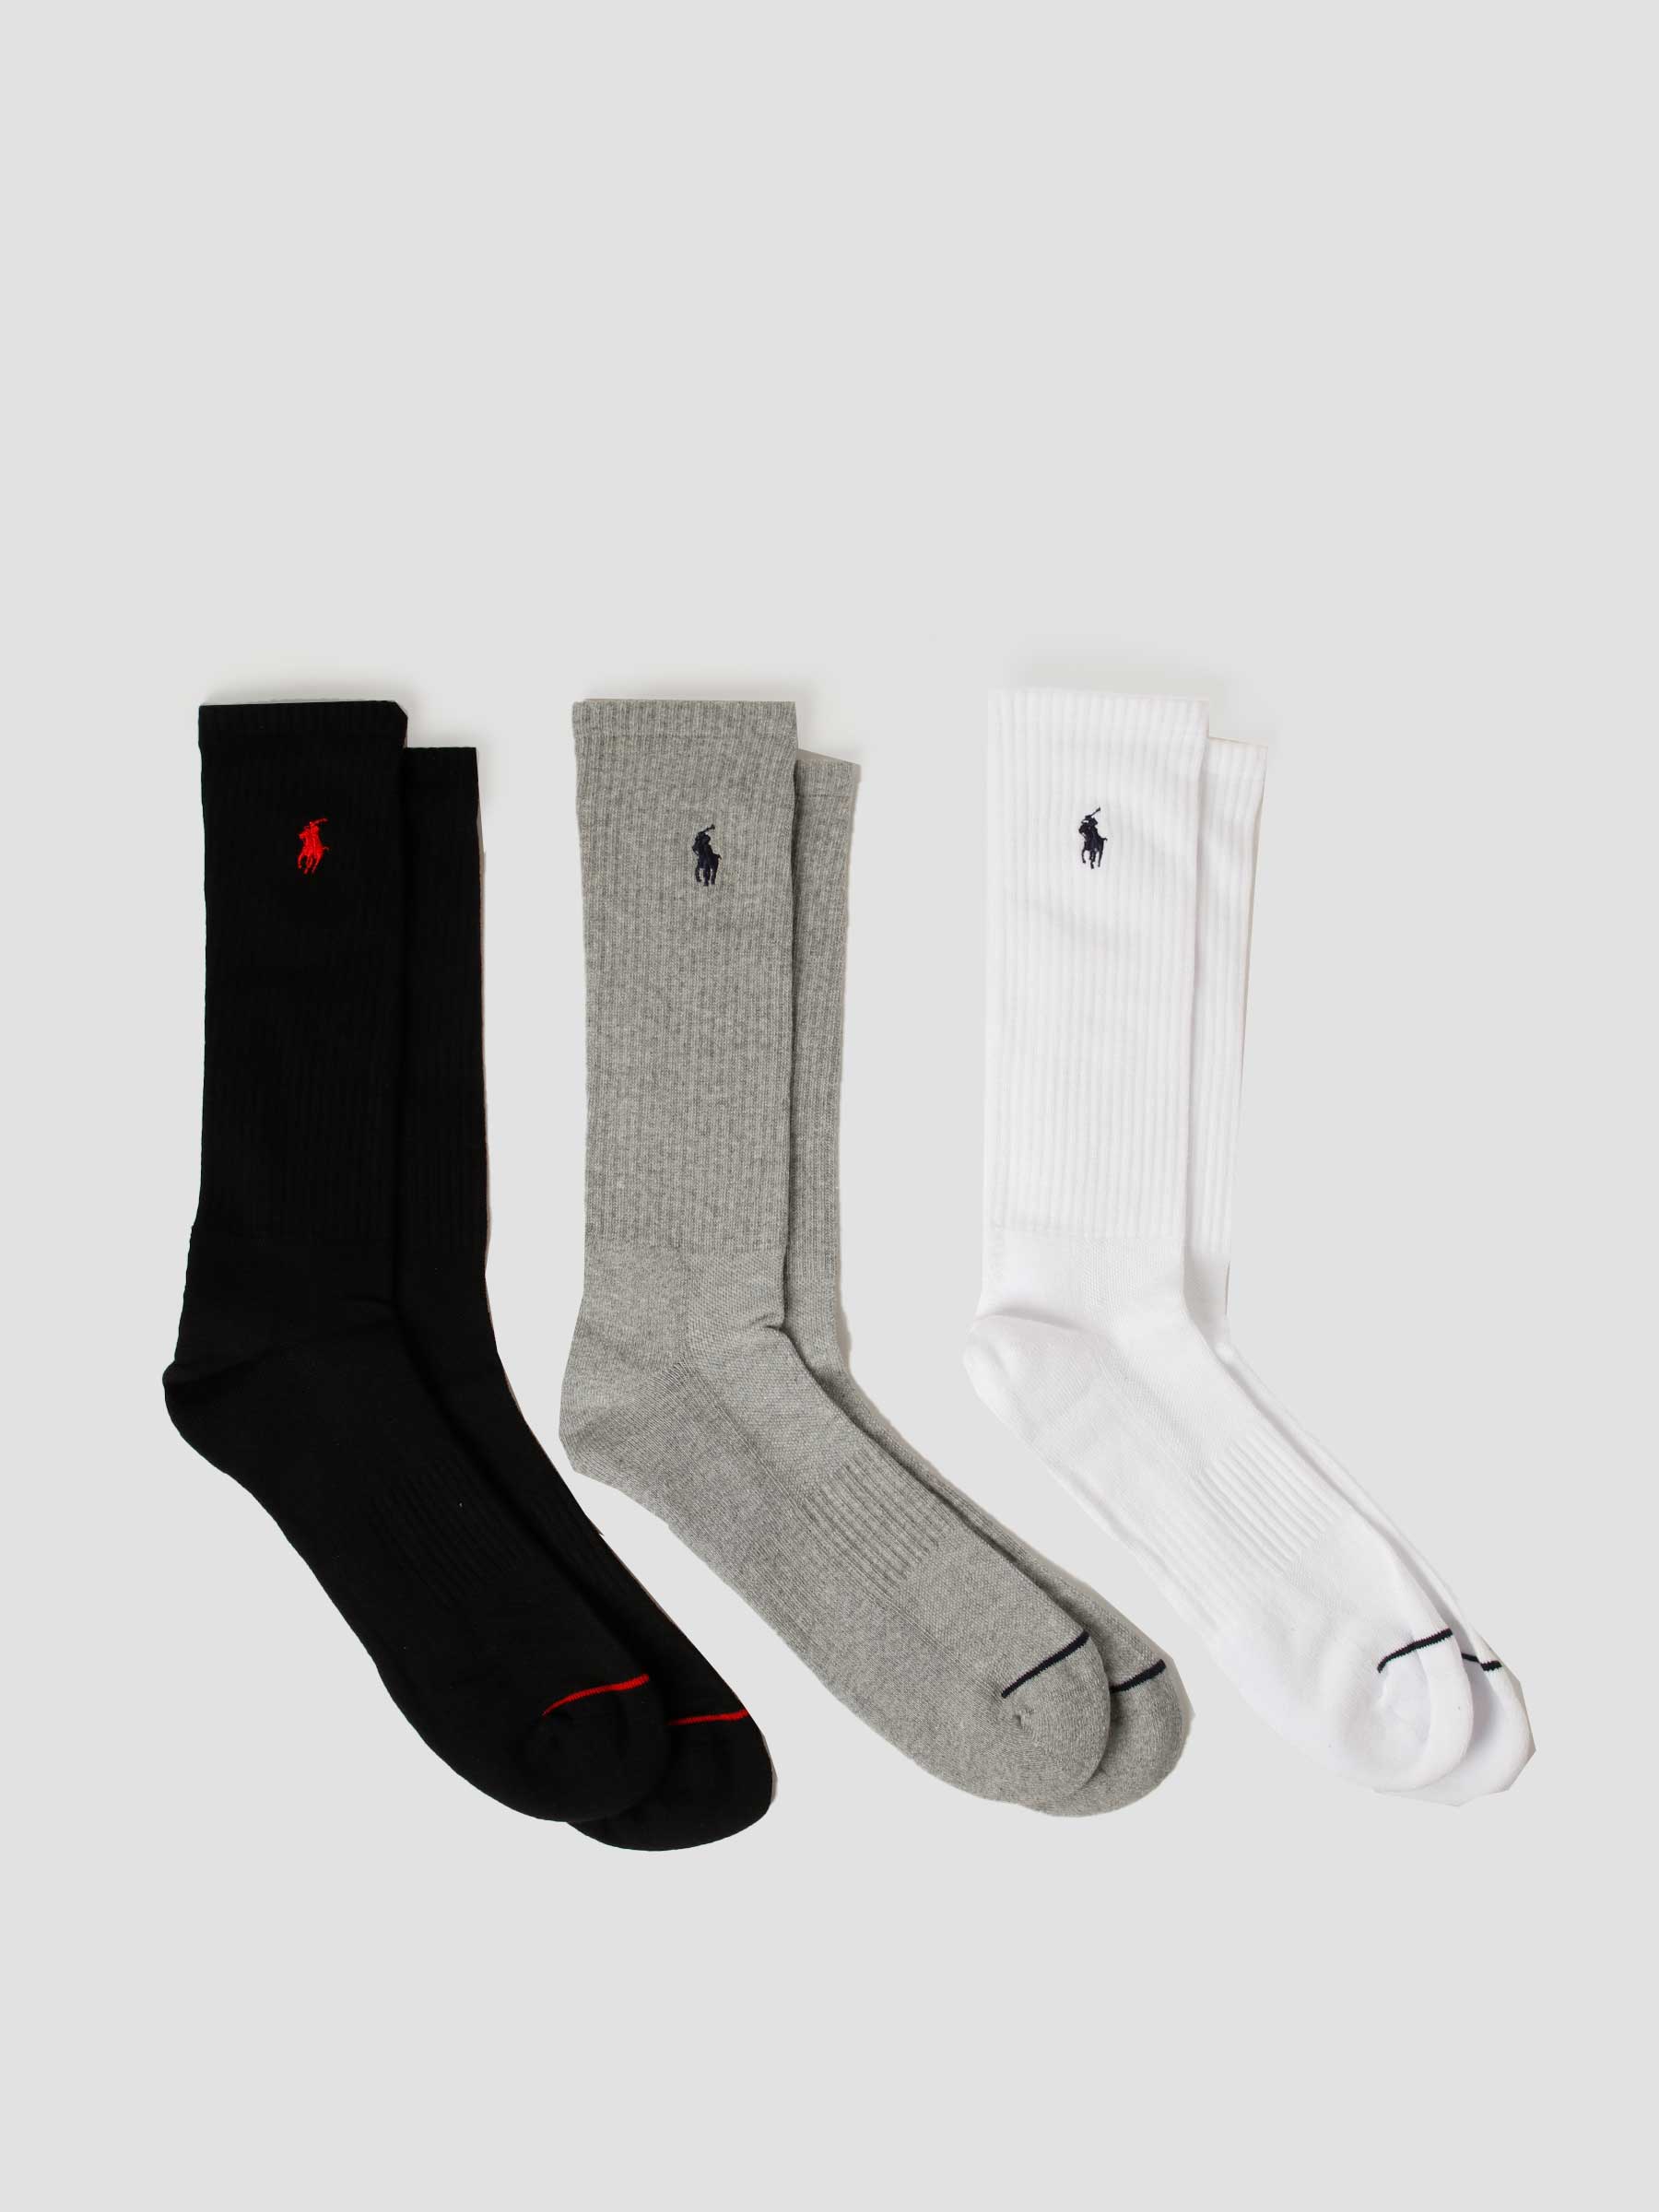 Polyester Spandex 3 Pack Crew Socks Black White Grey 449799746001